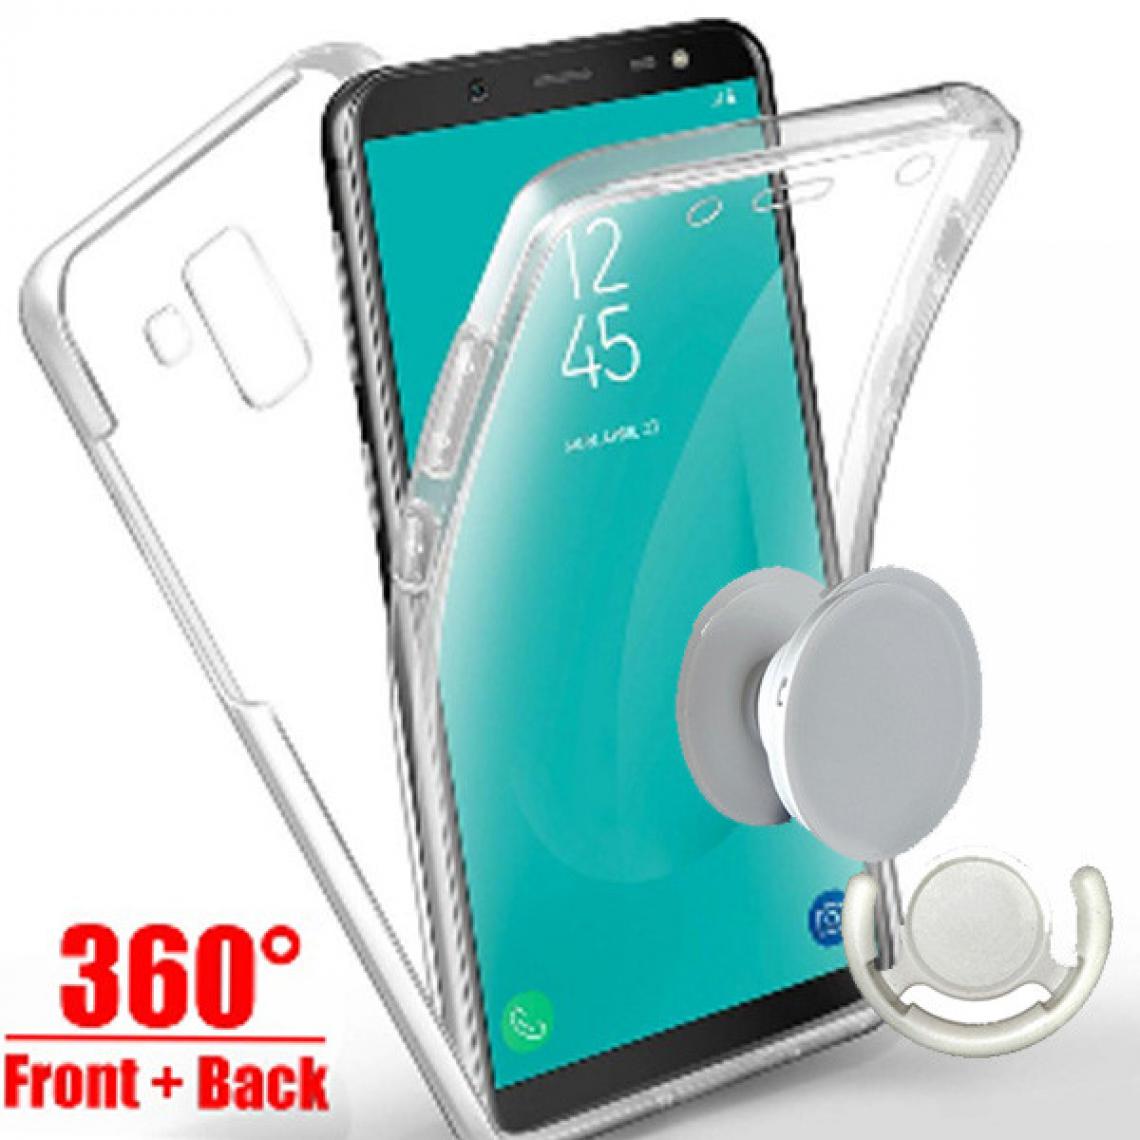 Phonecare - Kit Coque 3x1 360°Impact Protection + 1 PopSocket + 1 Support PopSocket Blanc - Impact Protection - Samsung J5 2017 - Coque, étui smartphone